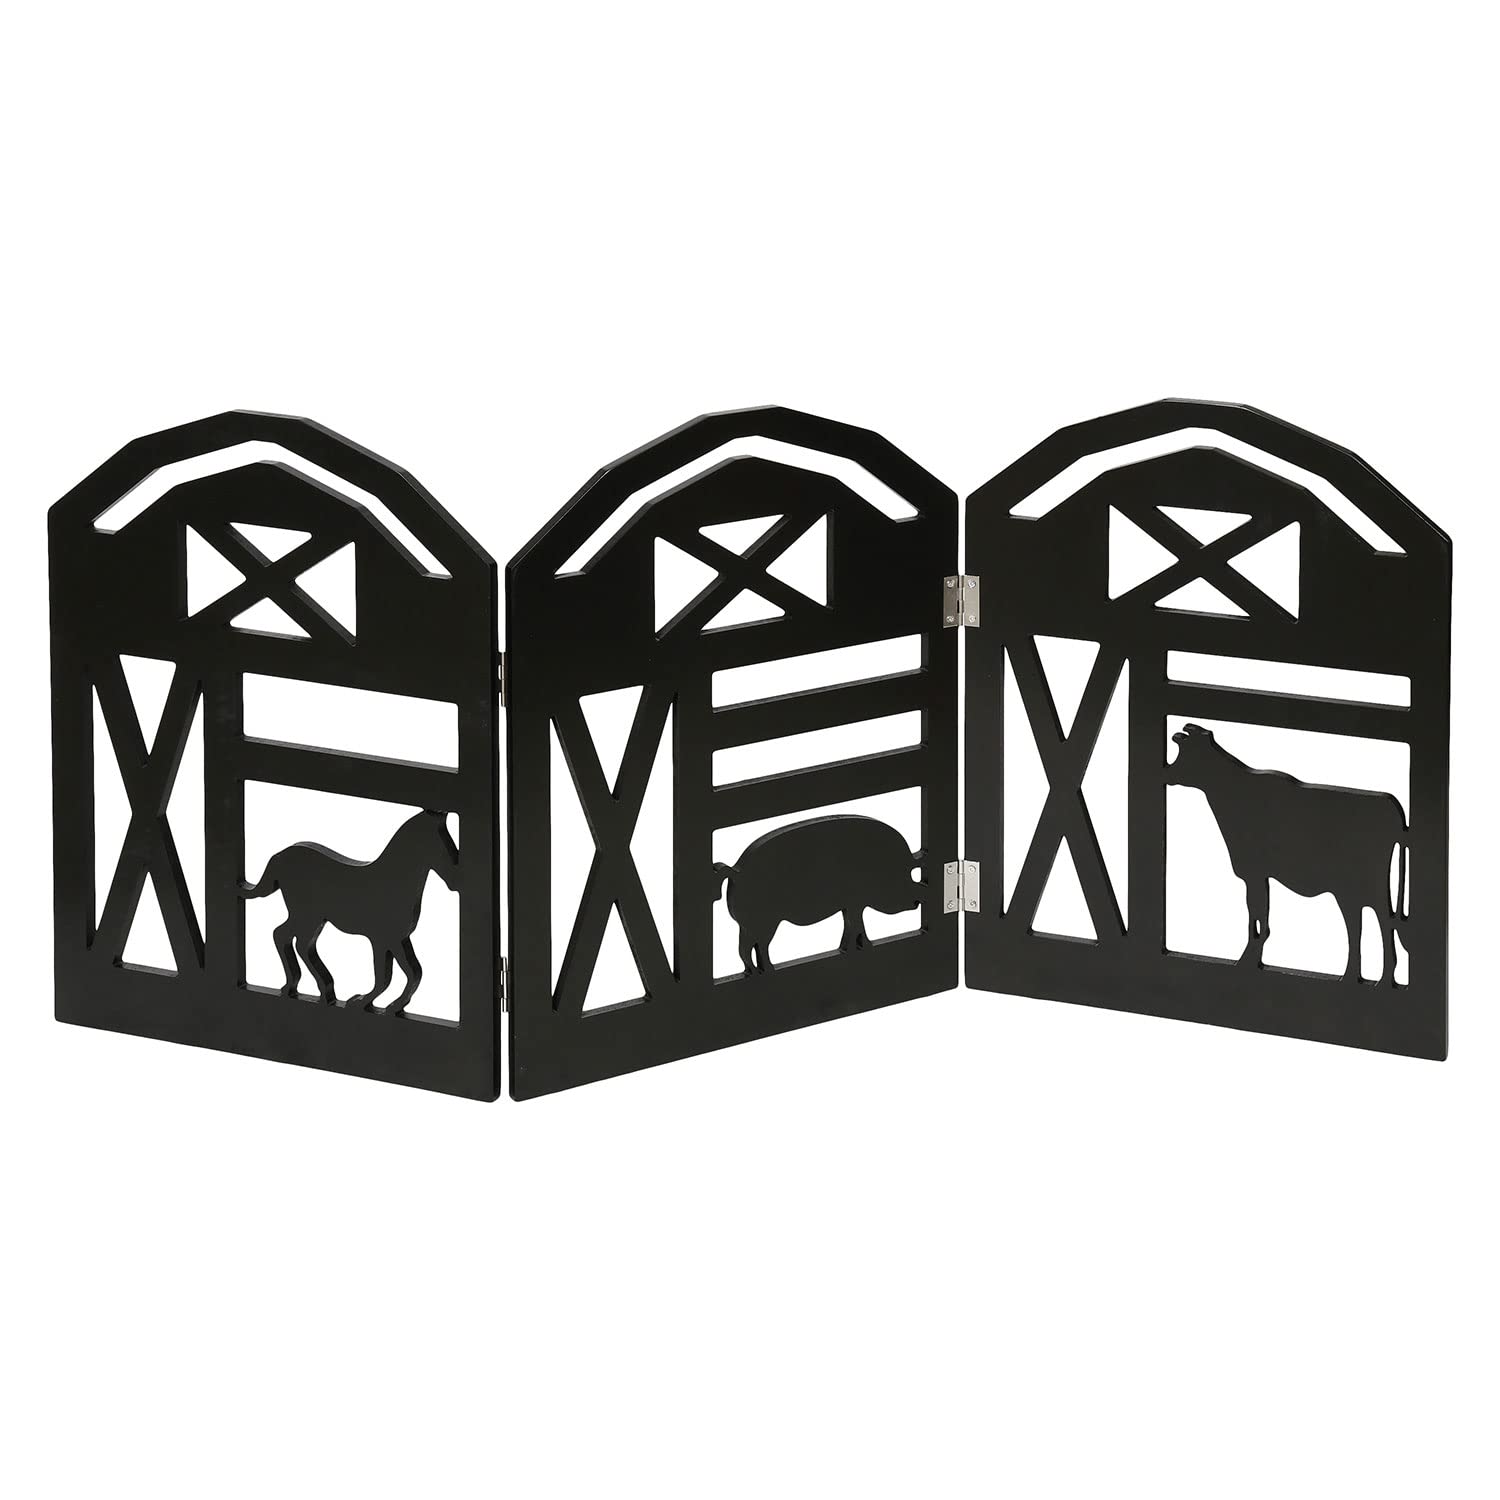 Indoor/Outdoor Wood Barnyard Freestanding Foldable Adjustable 3-Section Pet/Baby Gate